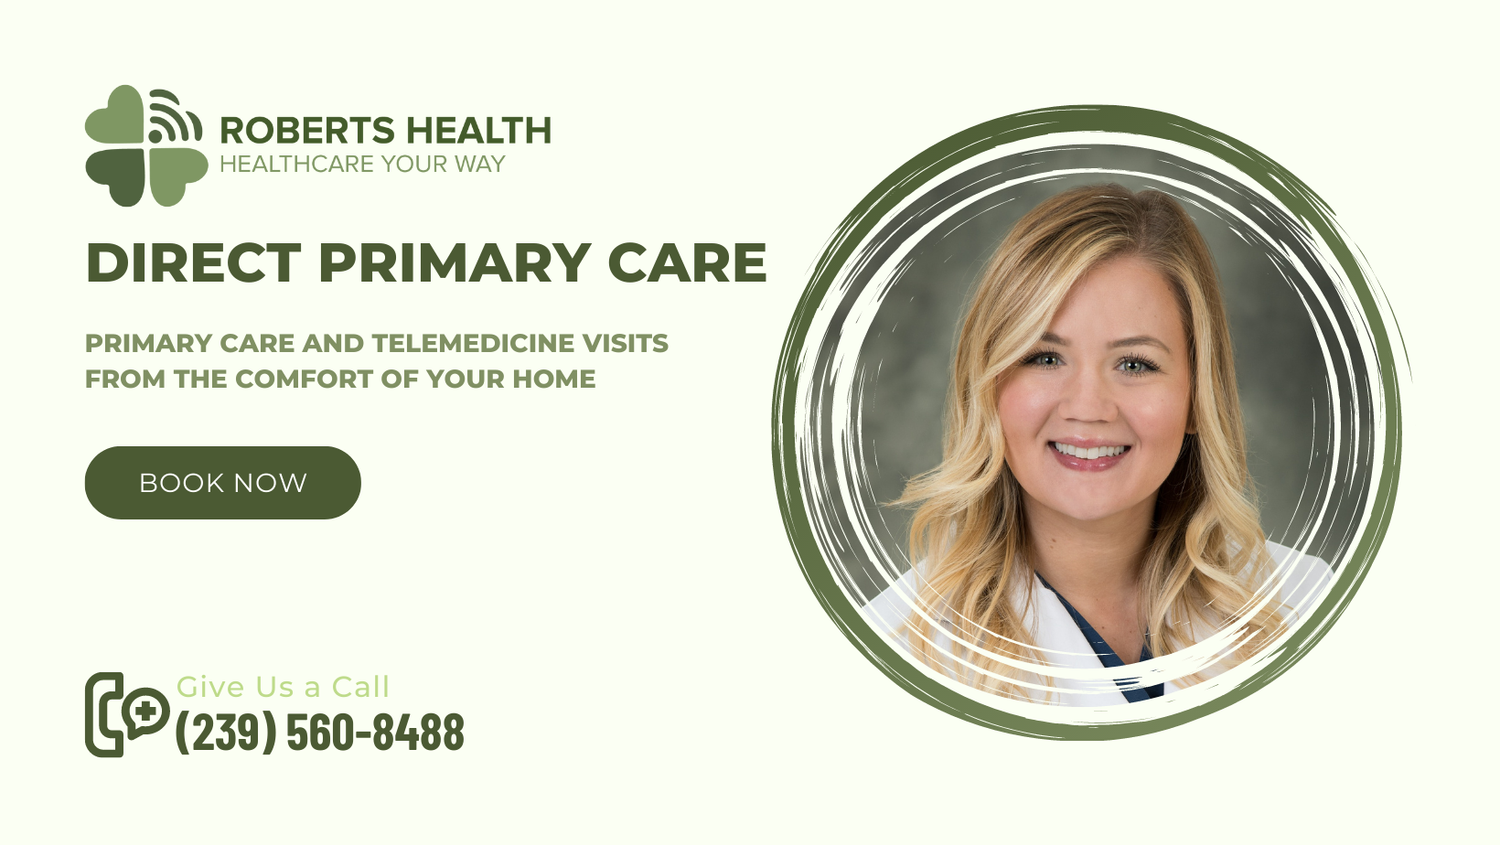 Roberts Health - Healthcare Your Way